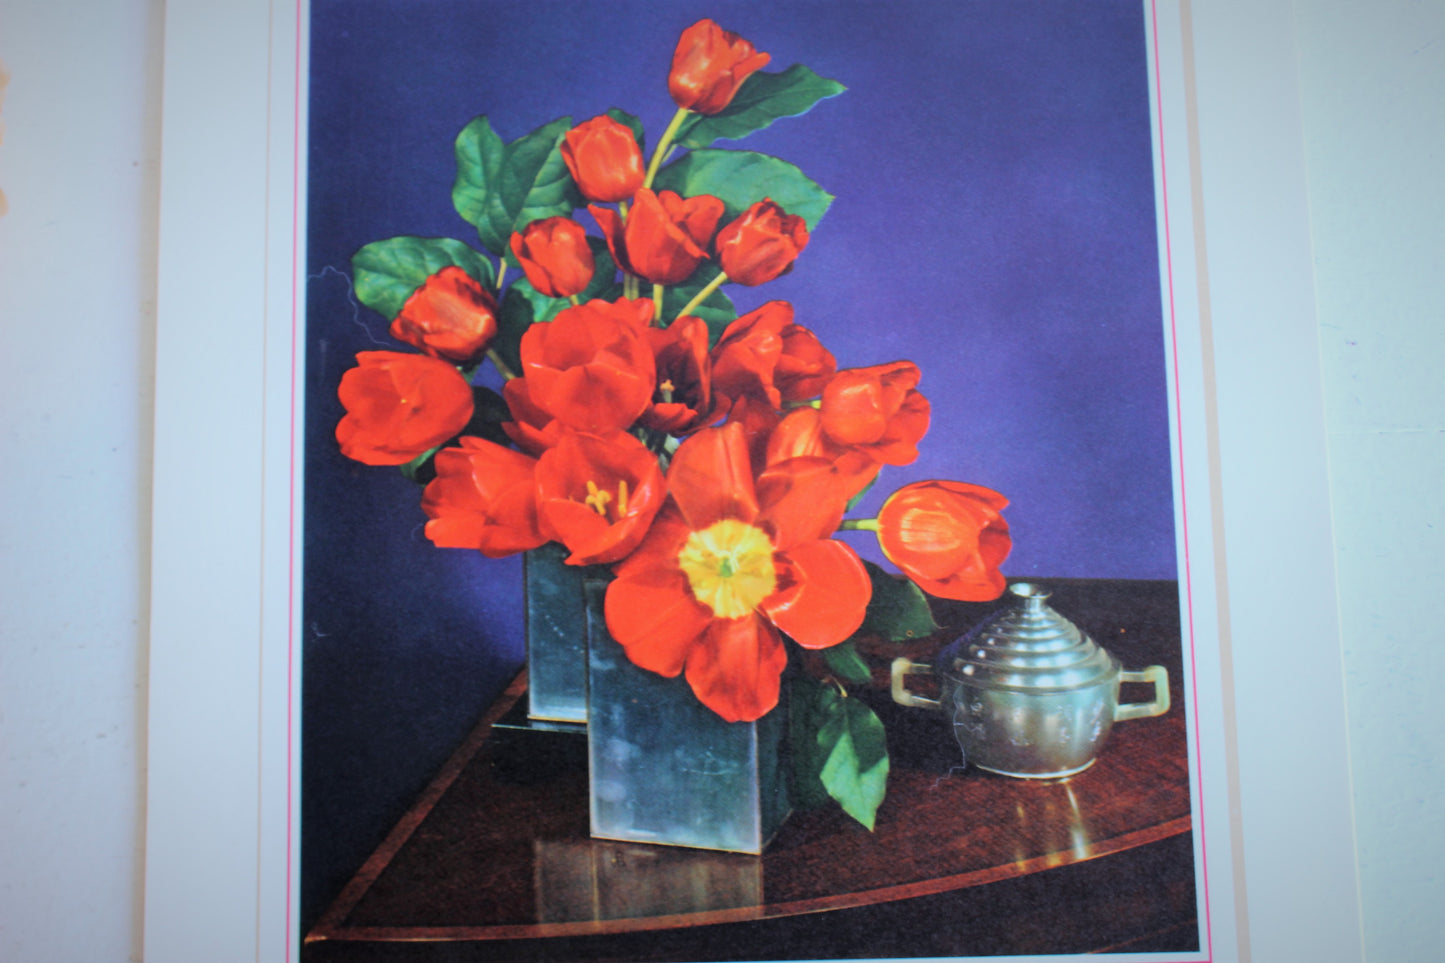 Vintage 1950s Calendar, 1954 North Star Motors Promotional Souvenir with Flowers